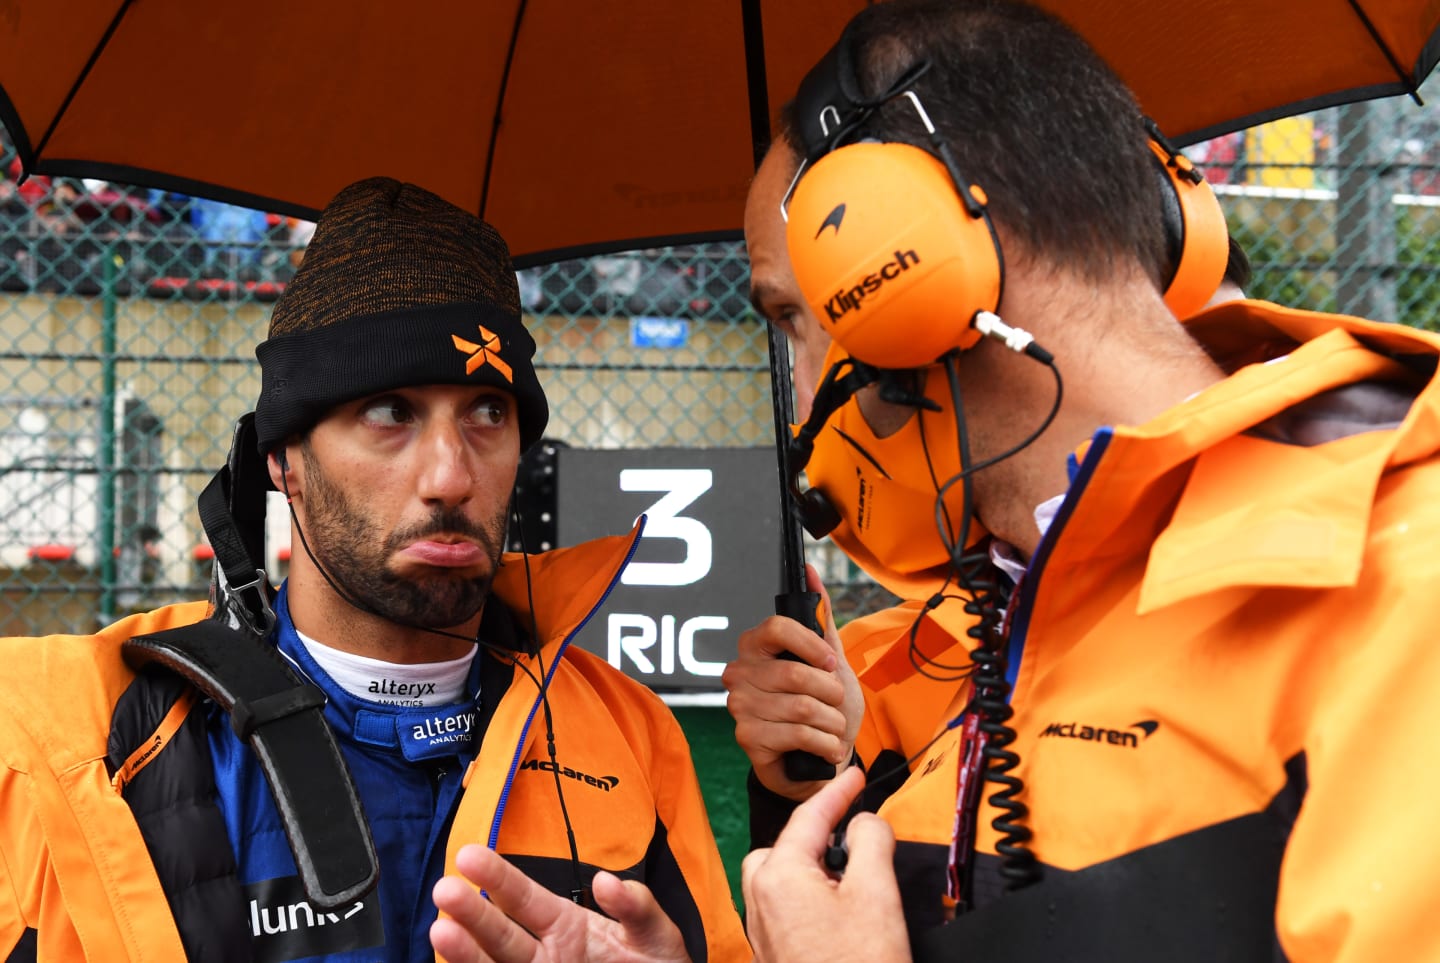 SPA, BELGIUM - AUGUST 29: Daniel Ricciardo of Australia and McLaren F1 prepares to drive on the